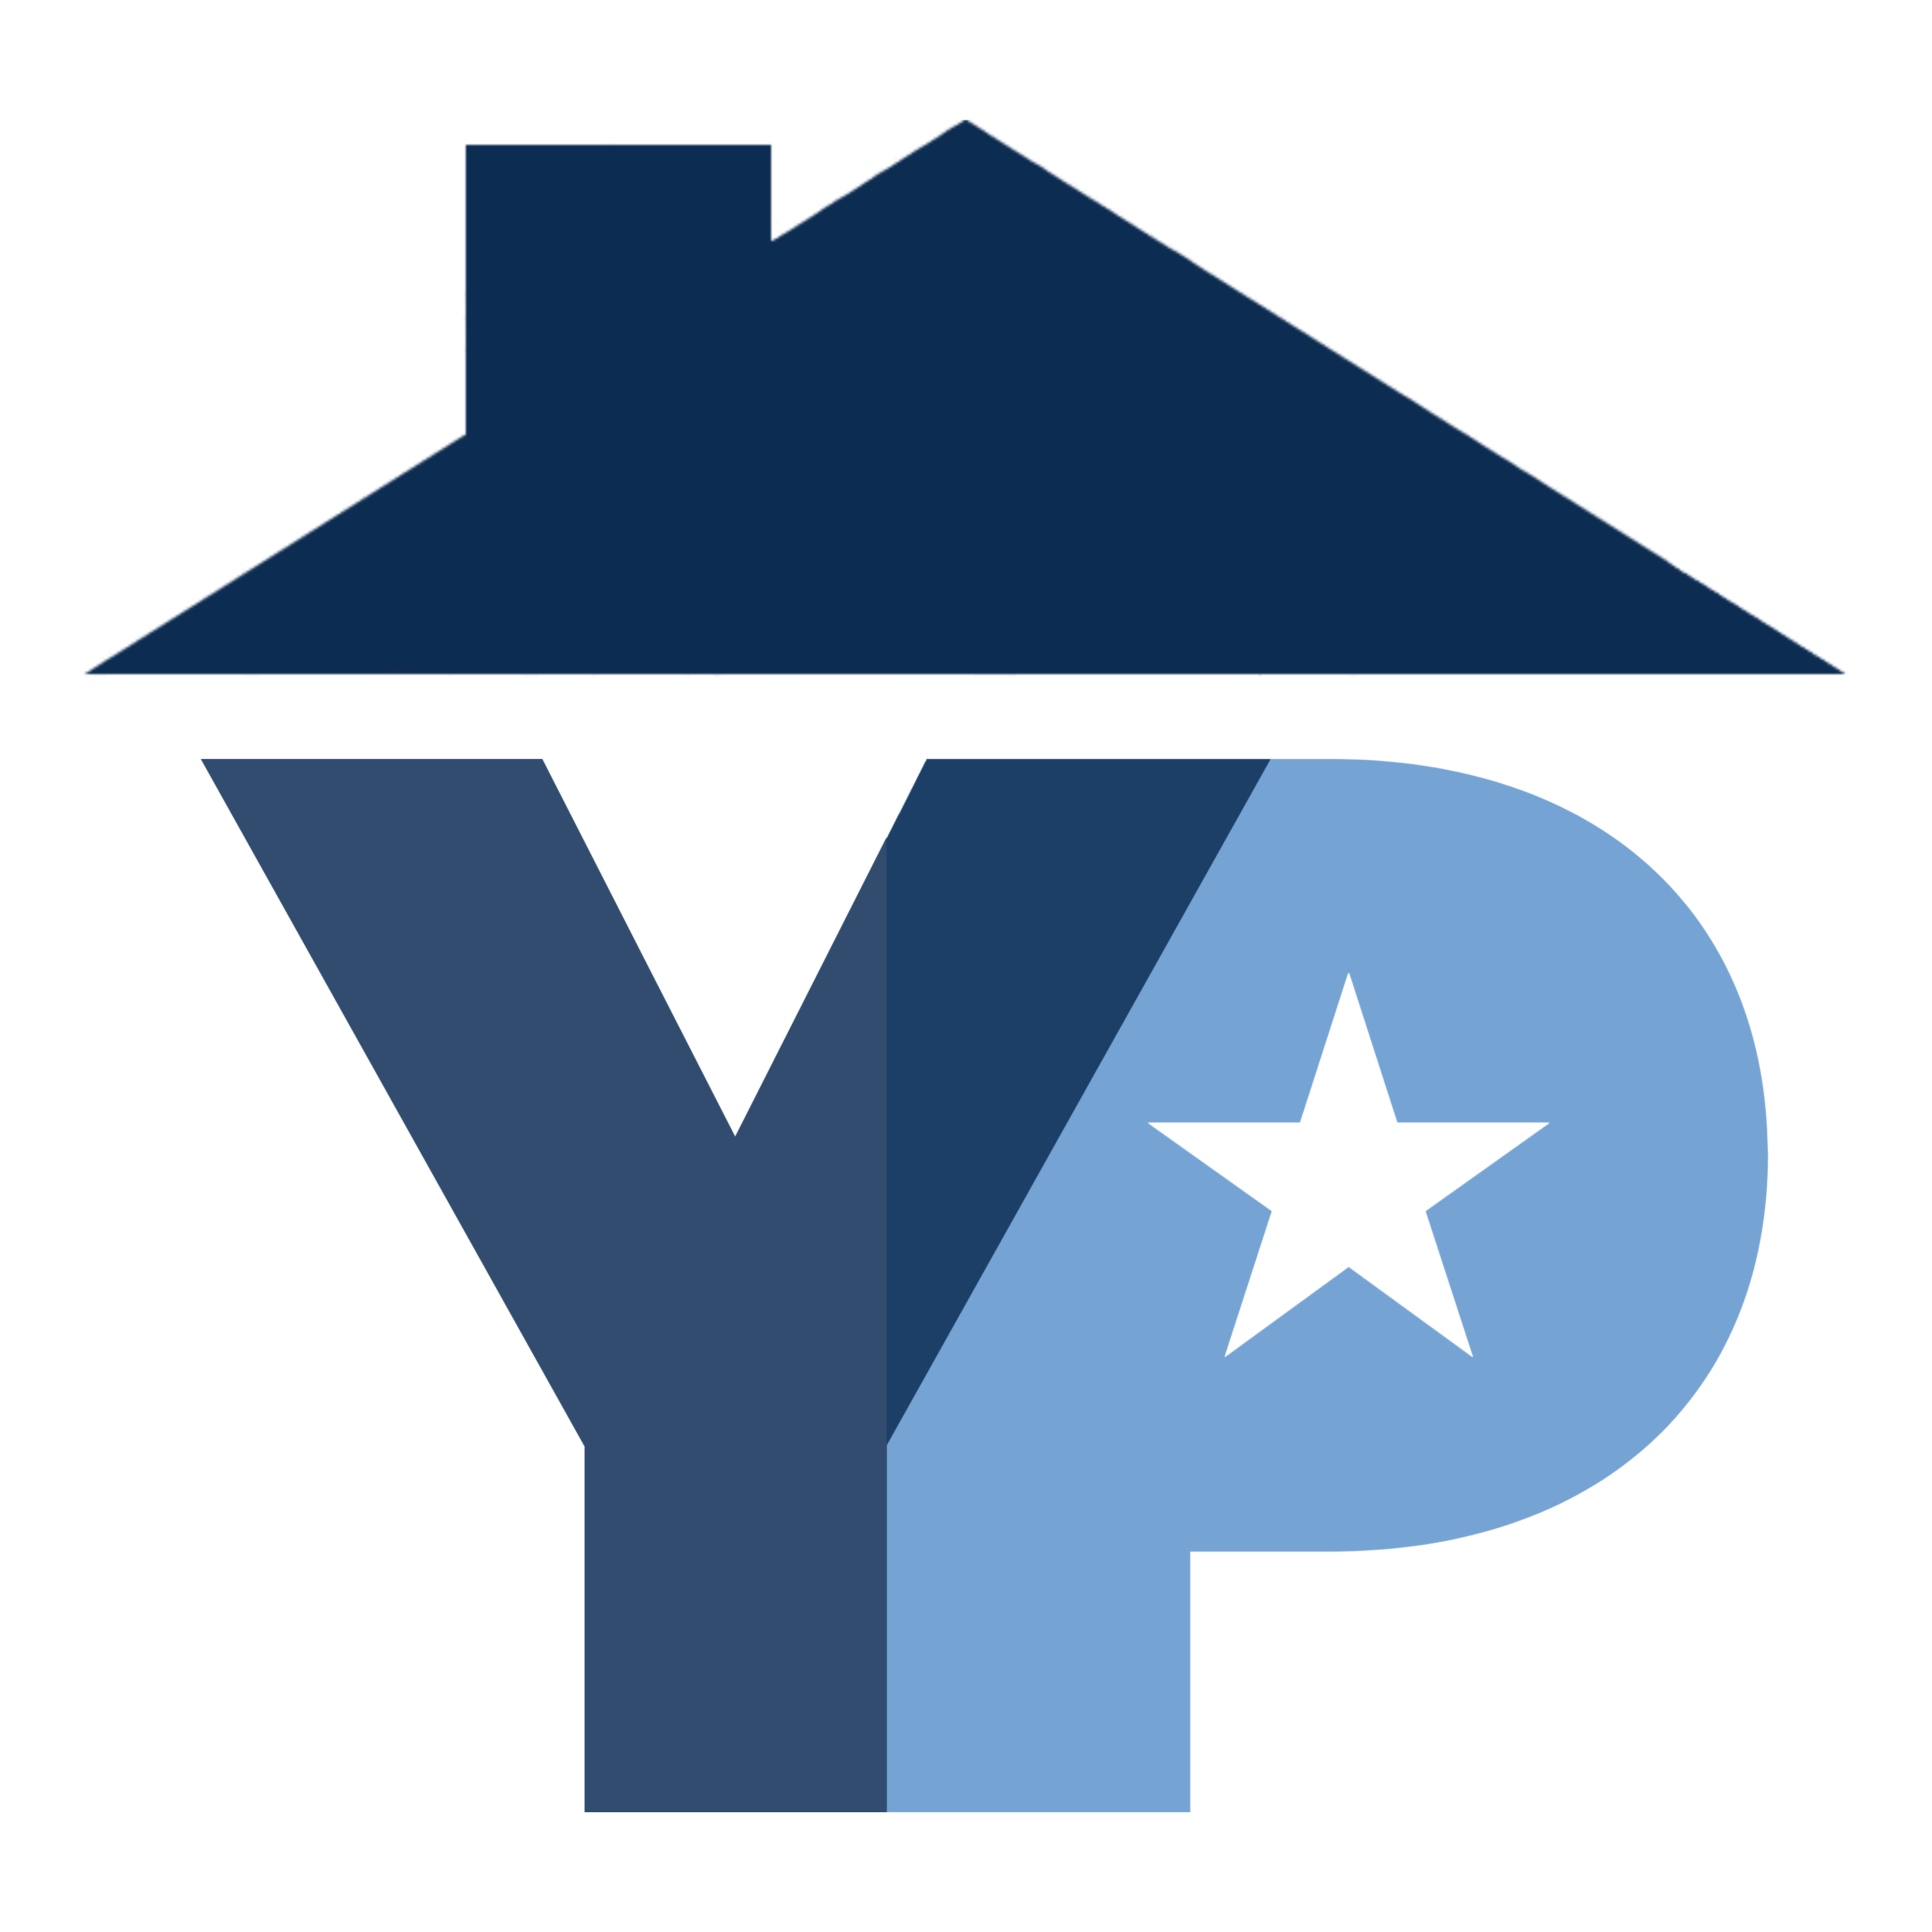 YP Logo